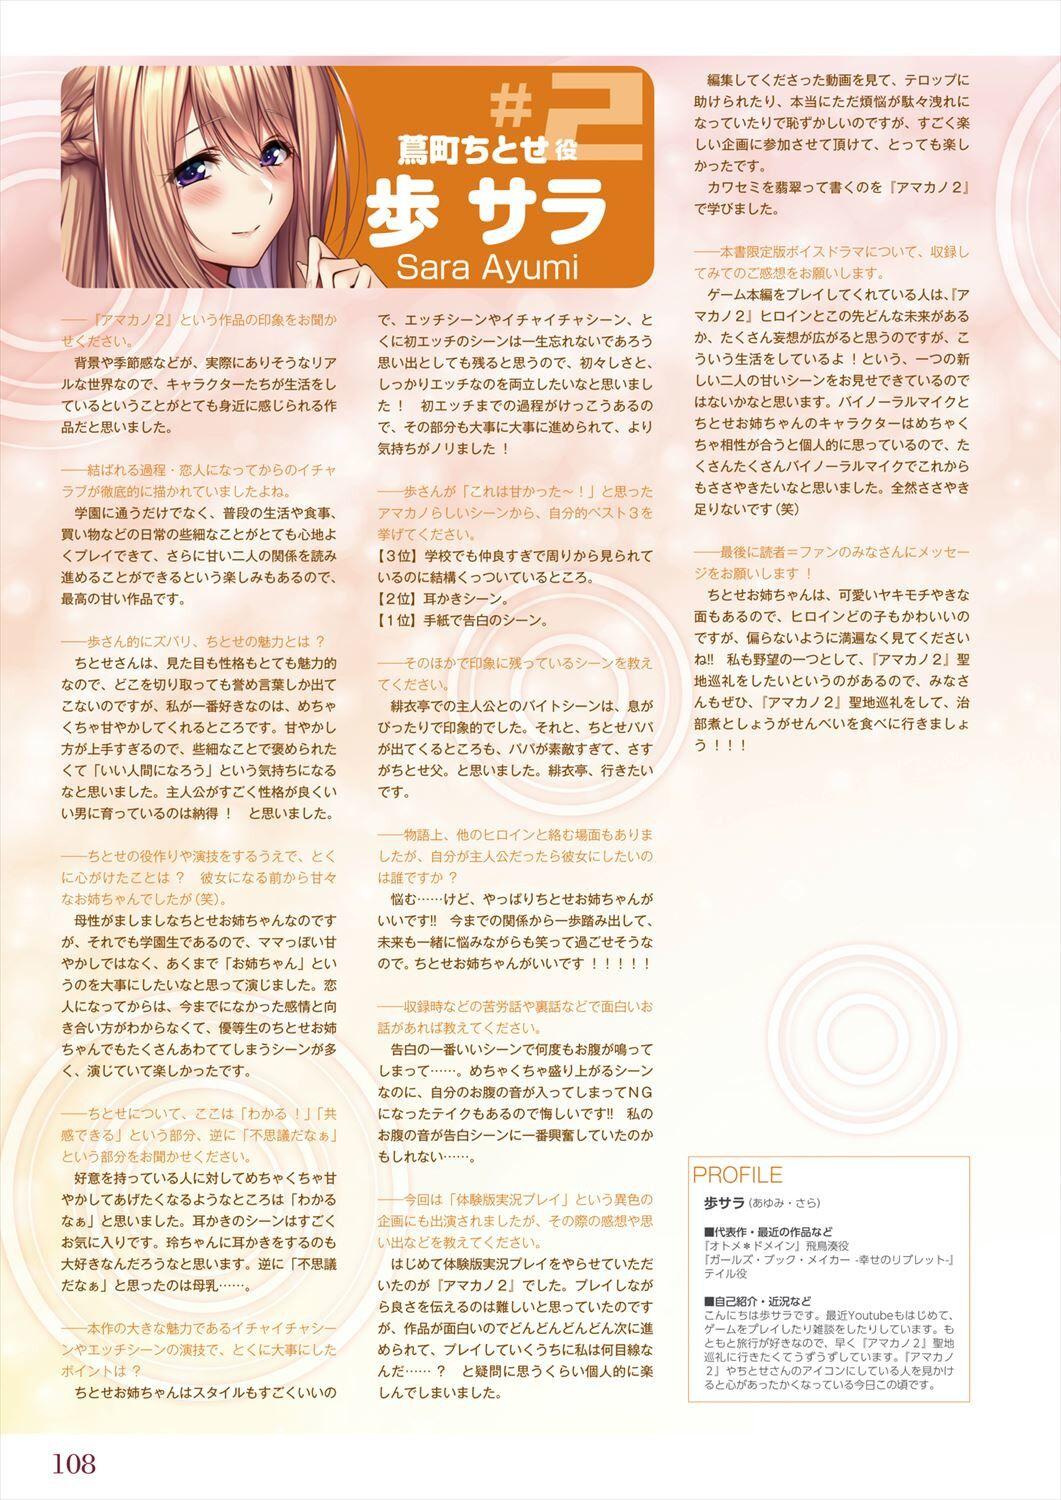 Amakano 2 Visual Fan Book 109